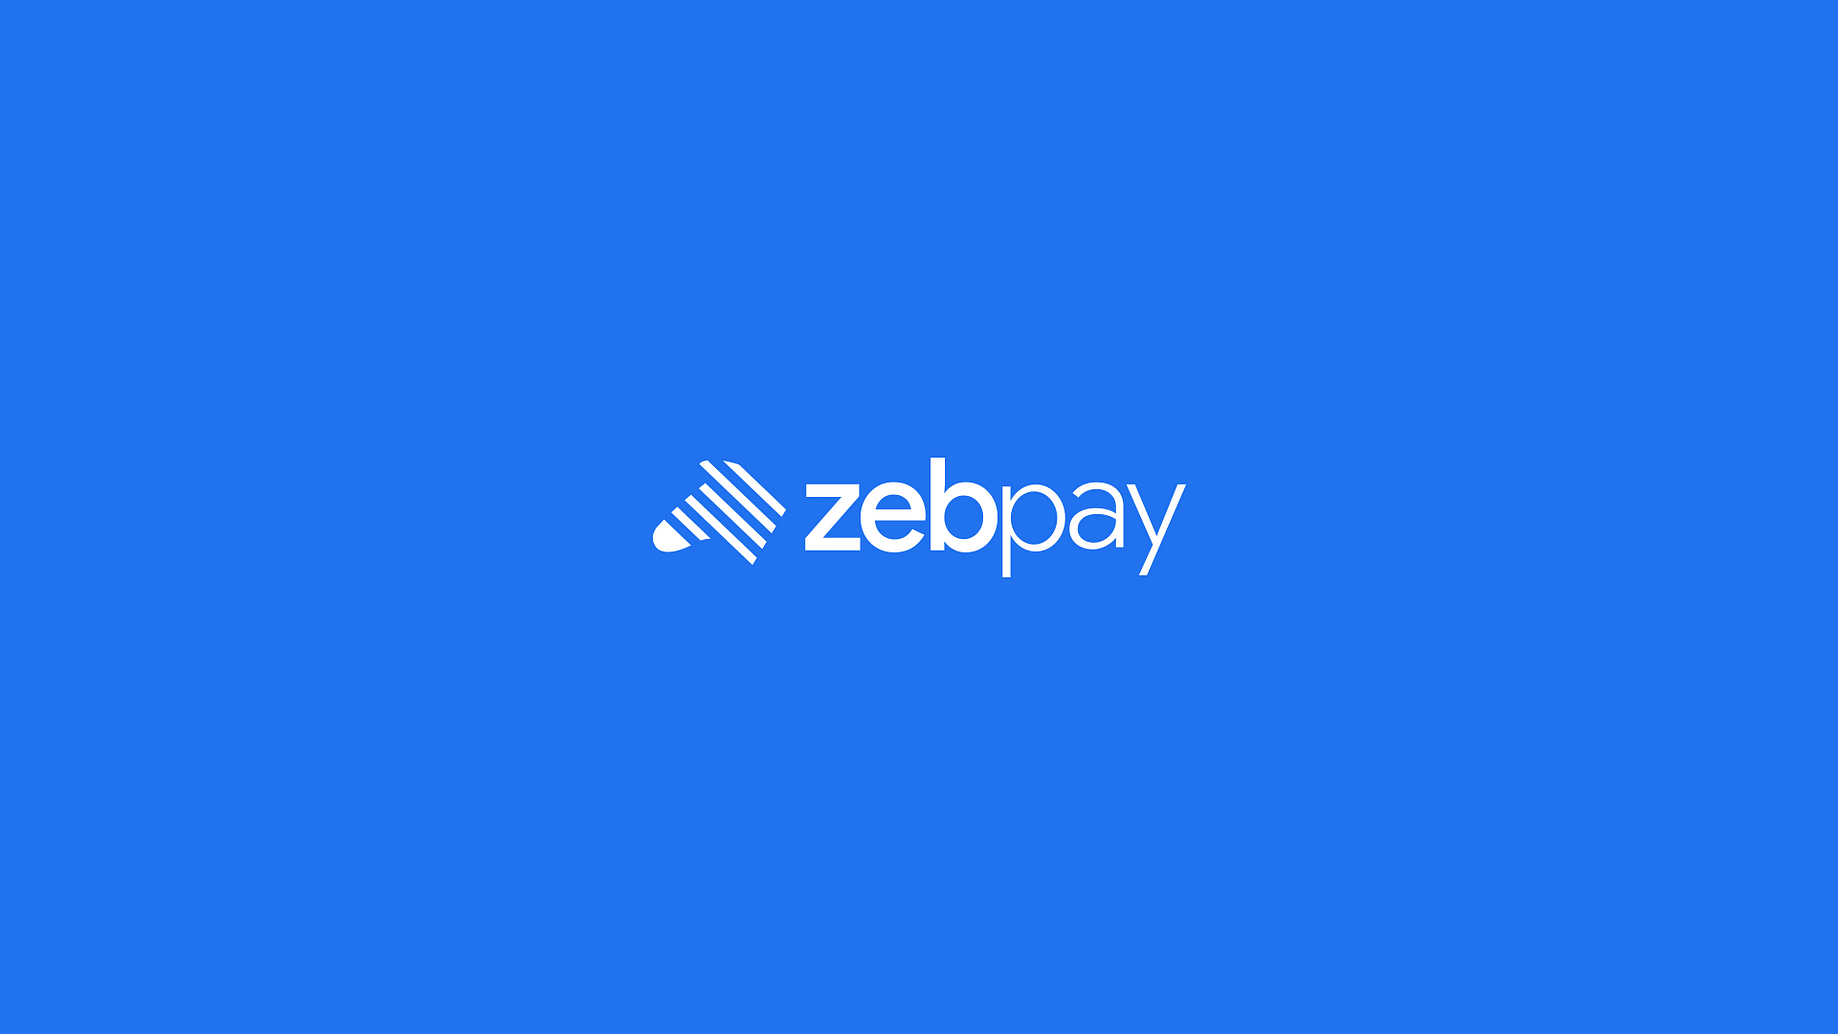 Zebpay Year In Review 2018 Zebpay - 